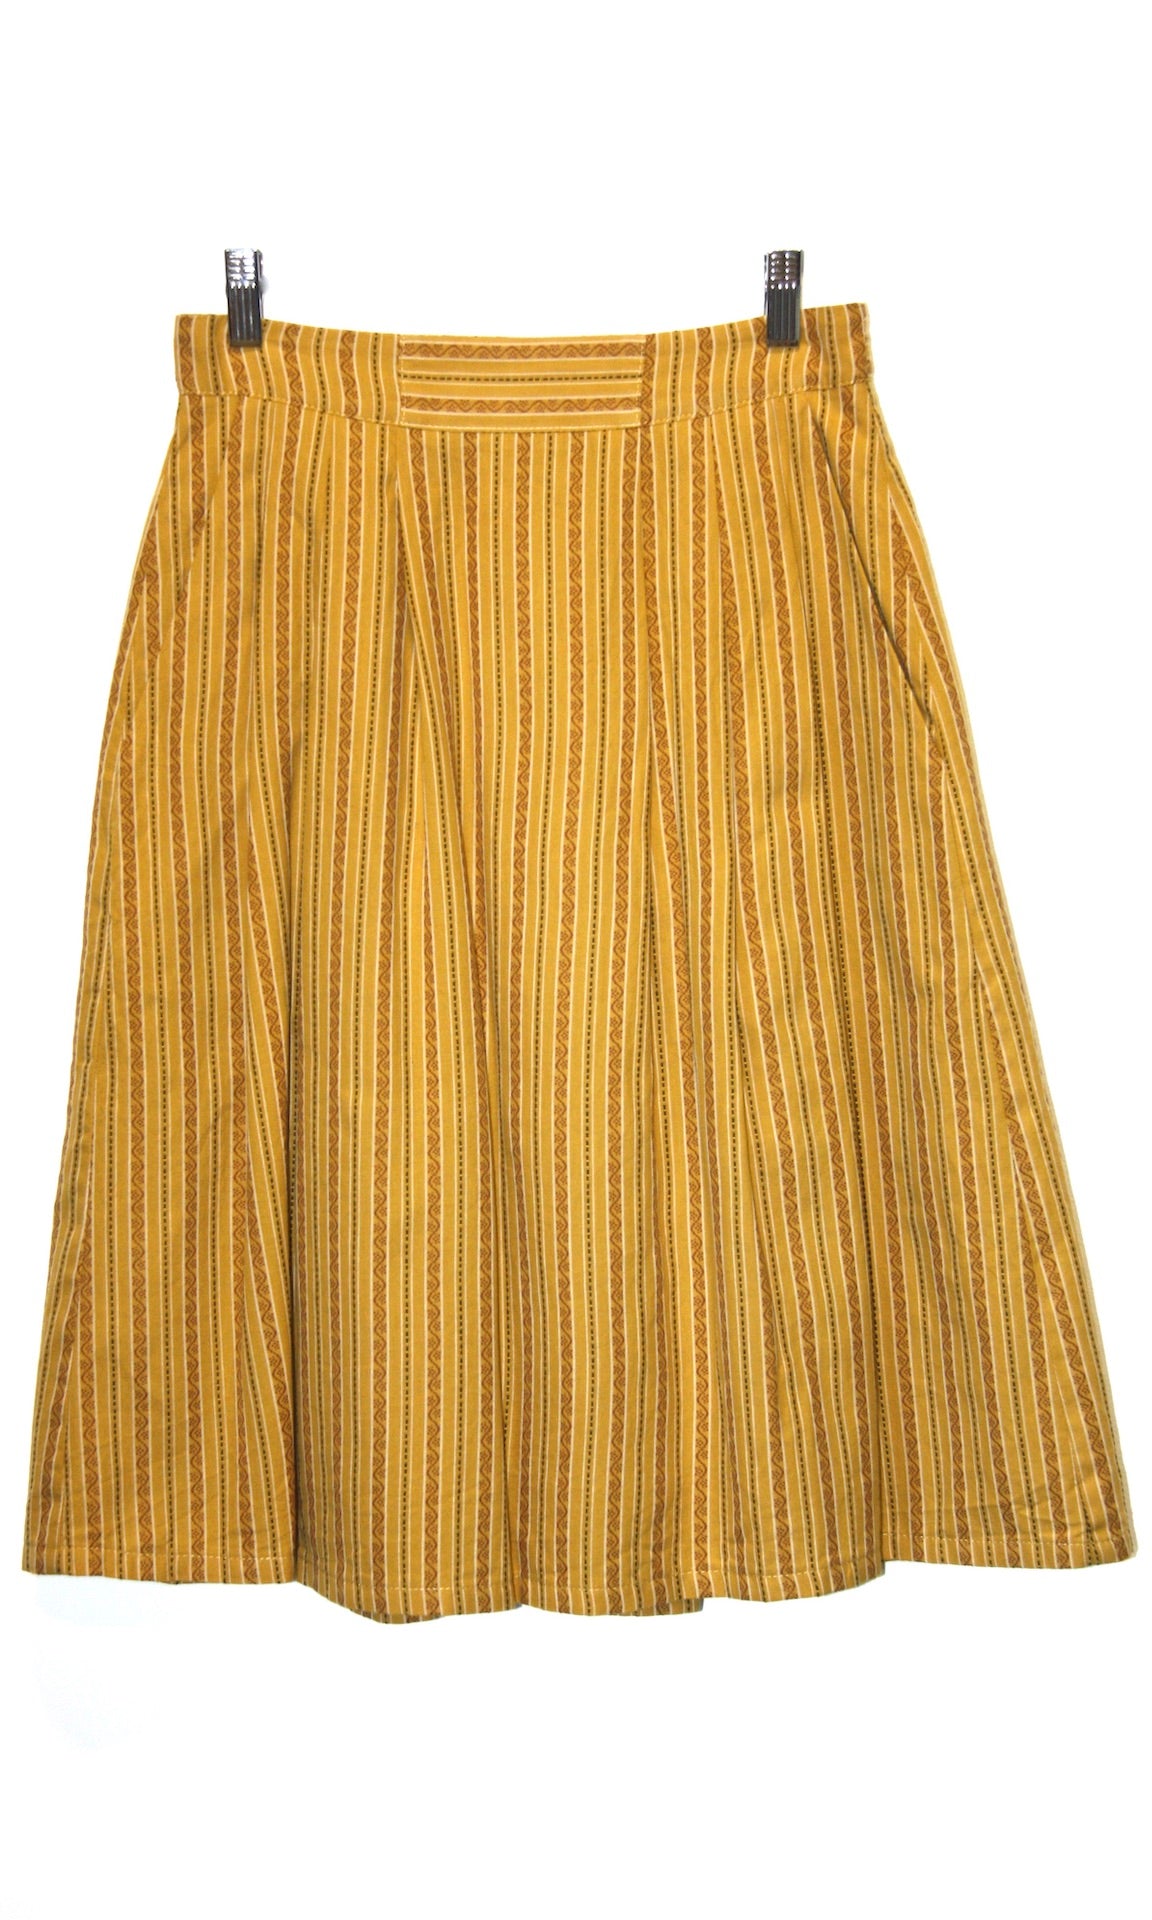 RN455 - 6 - Macareux Skirt - Ochre Stripe